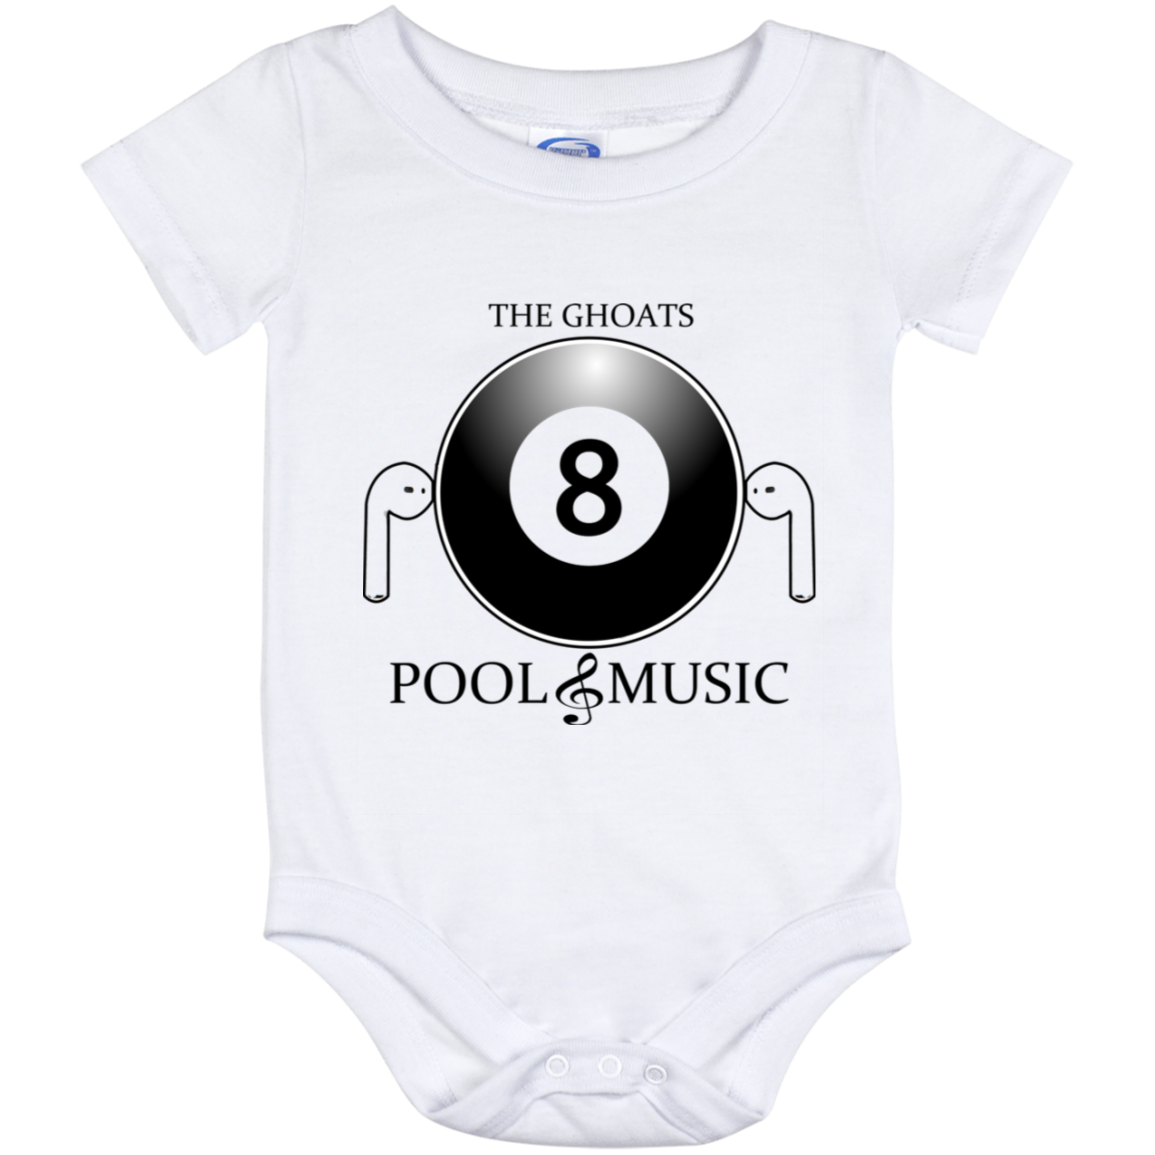 The GHOATS Custom Design. #19 Pool & Music. Baby Onesie 12 Month